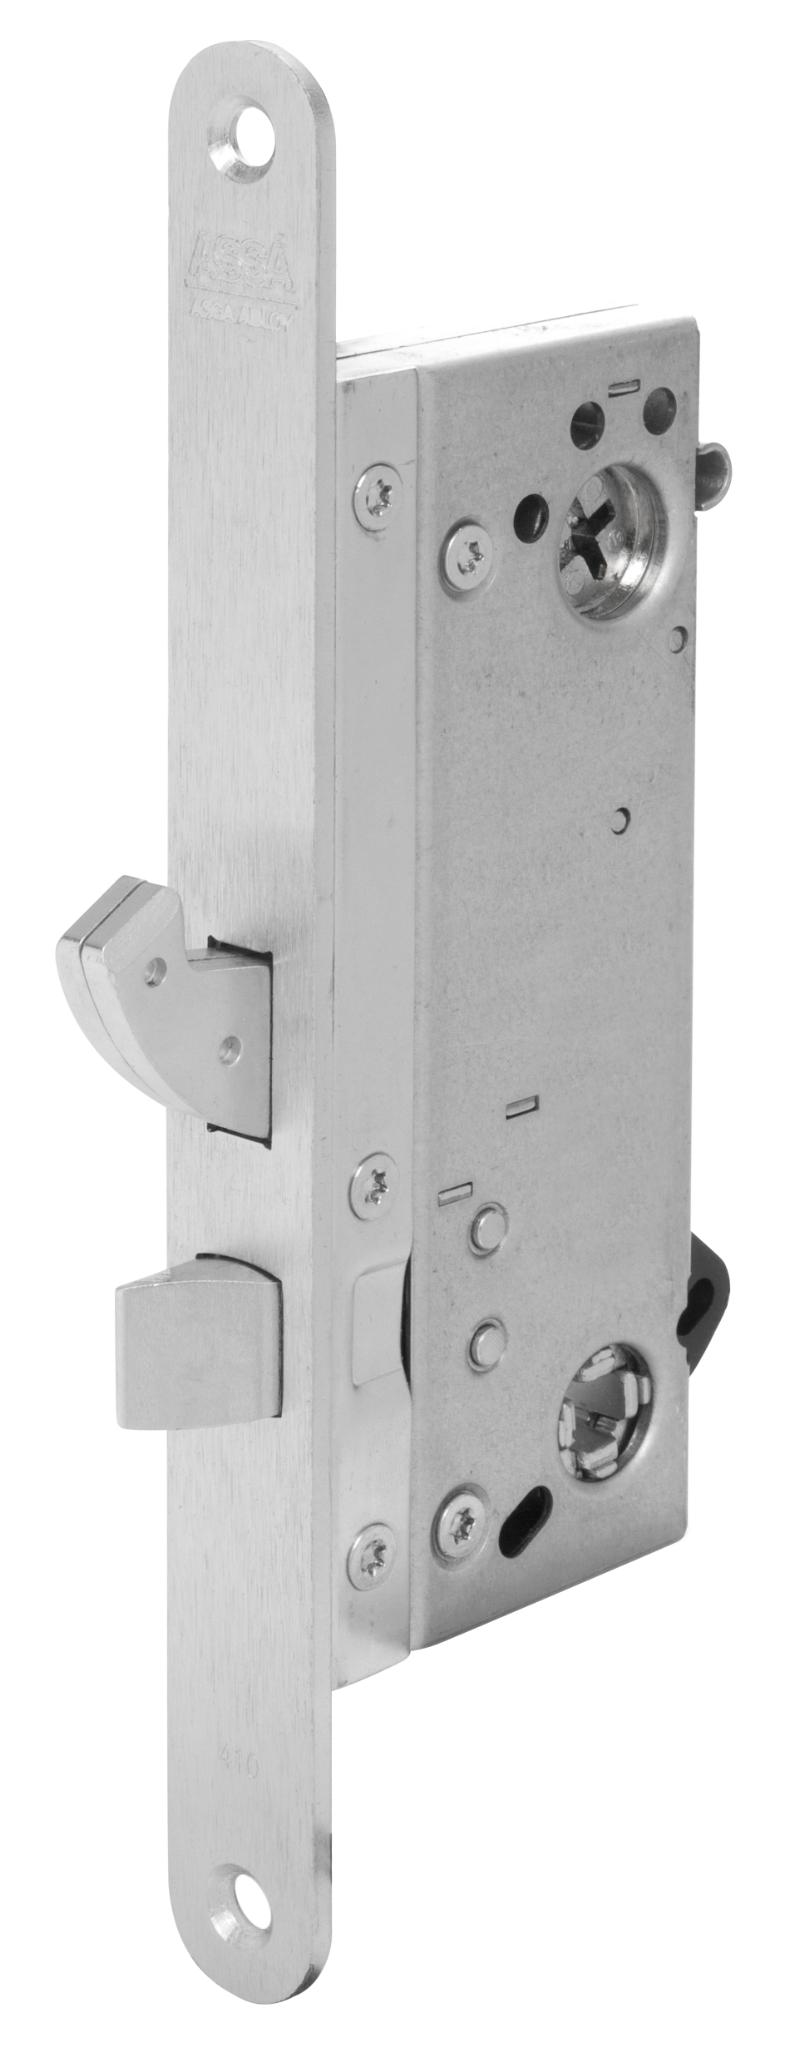 Assa lock box Connect 410 w/micro switch, reversible